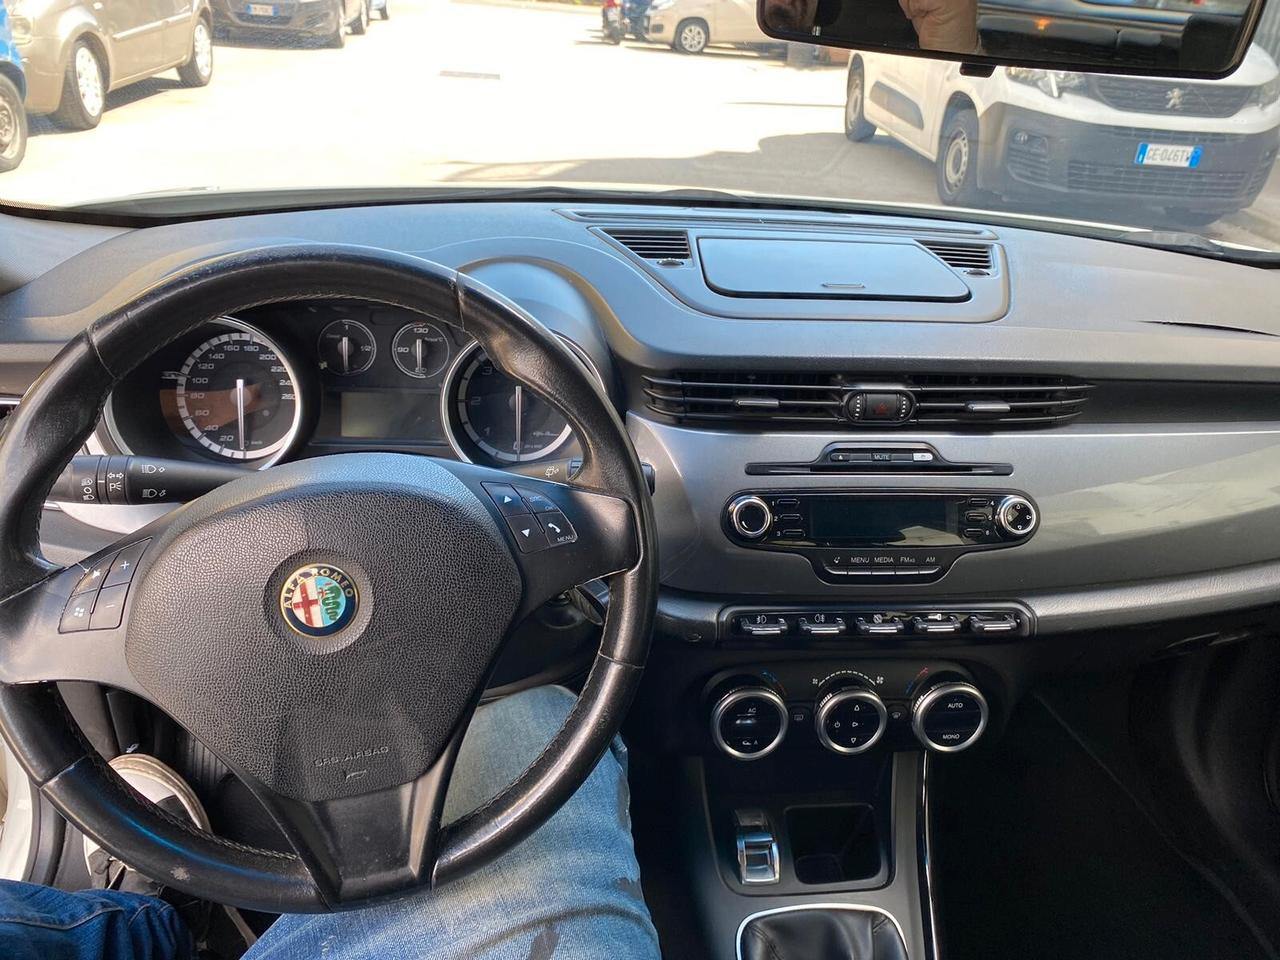 Alfa Romeo Giulietta 1.6 JTDm-2 105 CV Progression